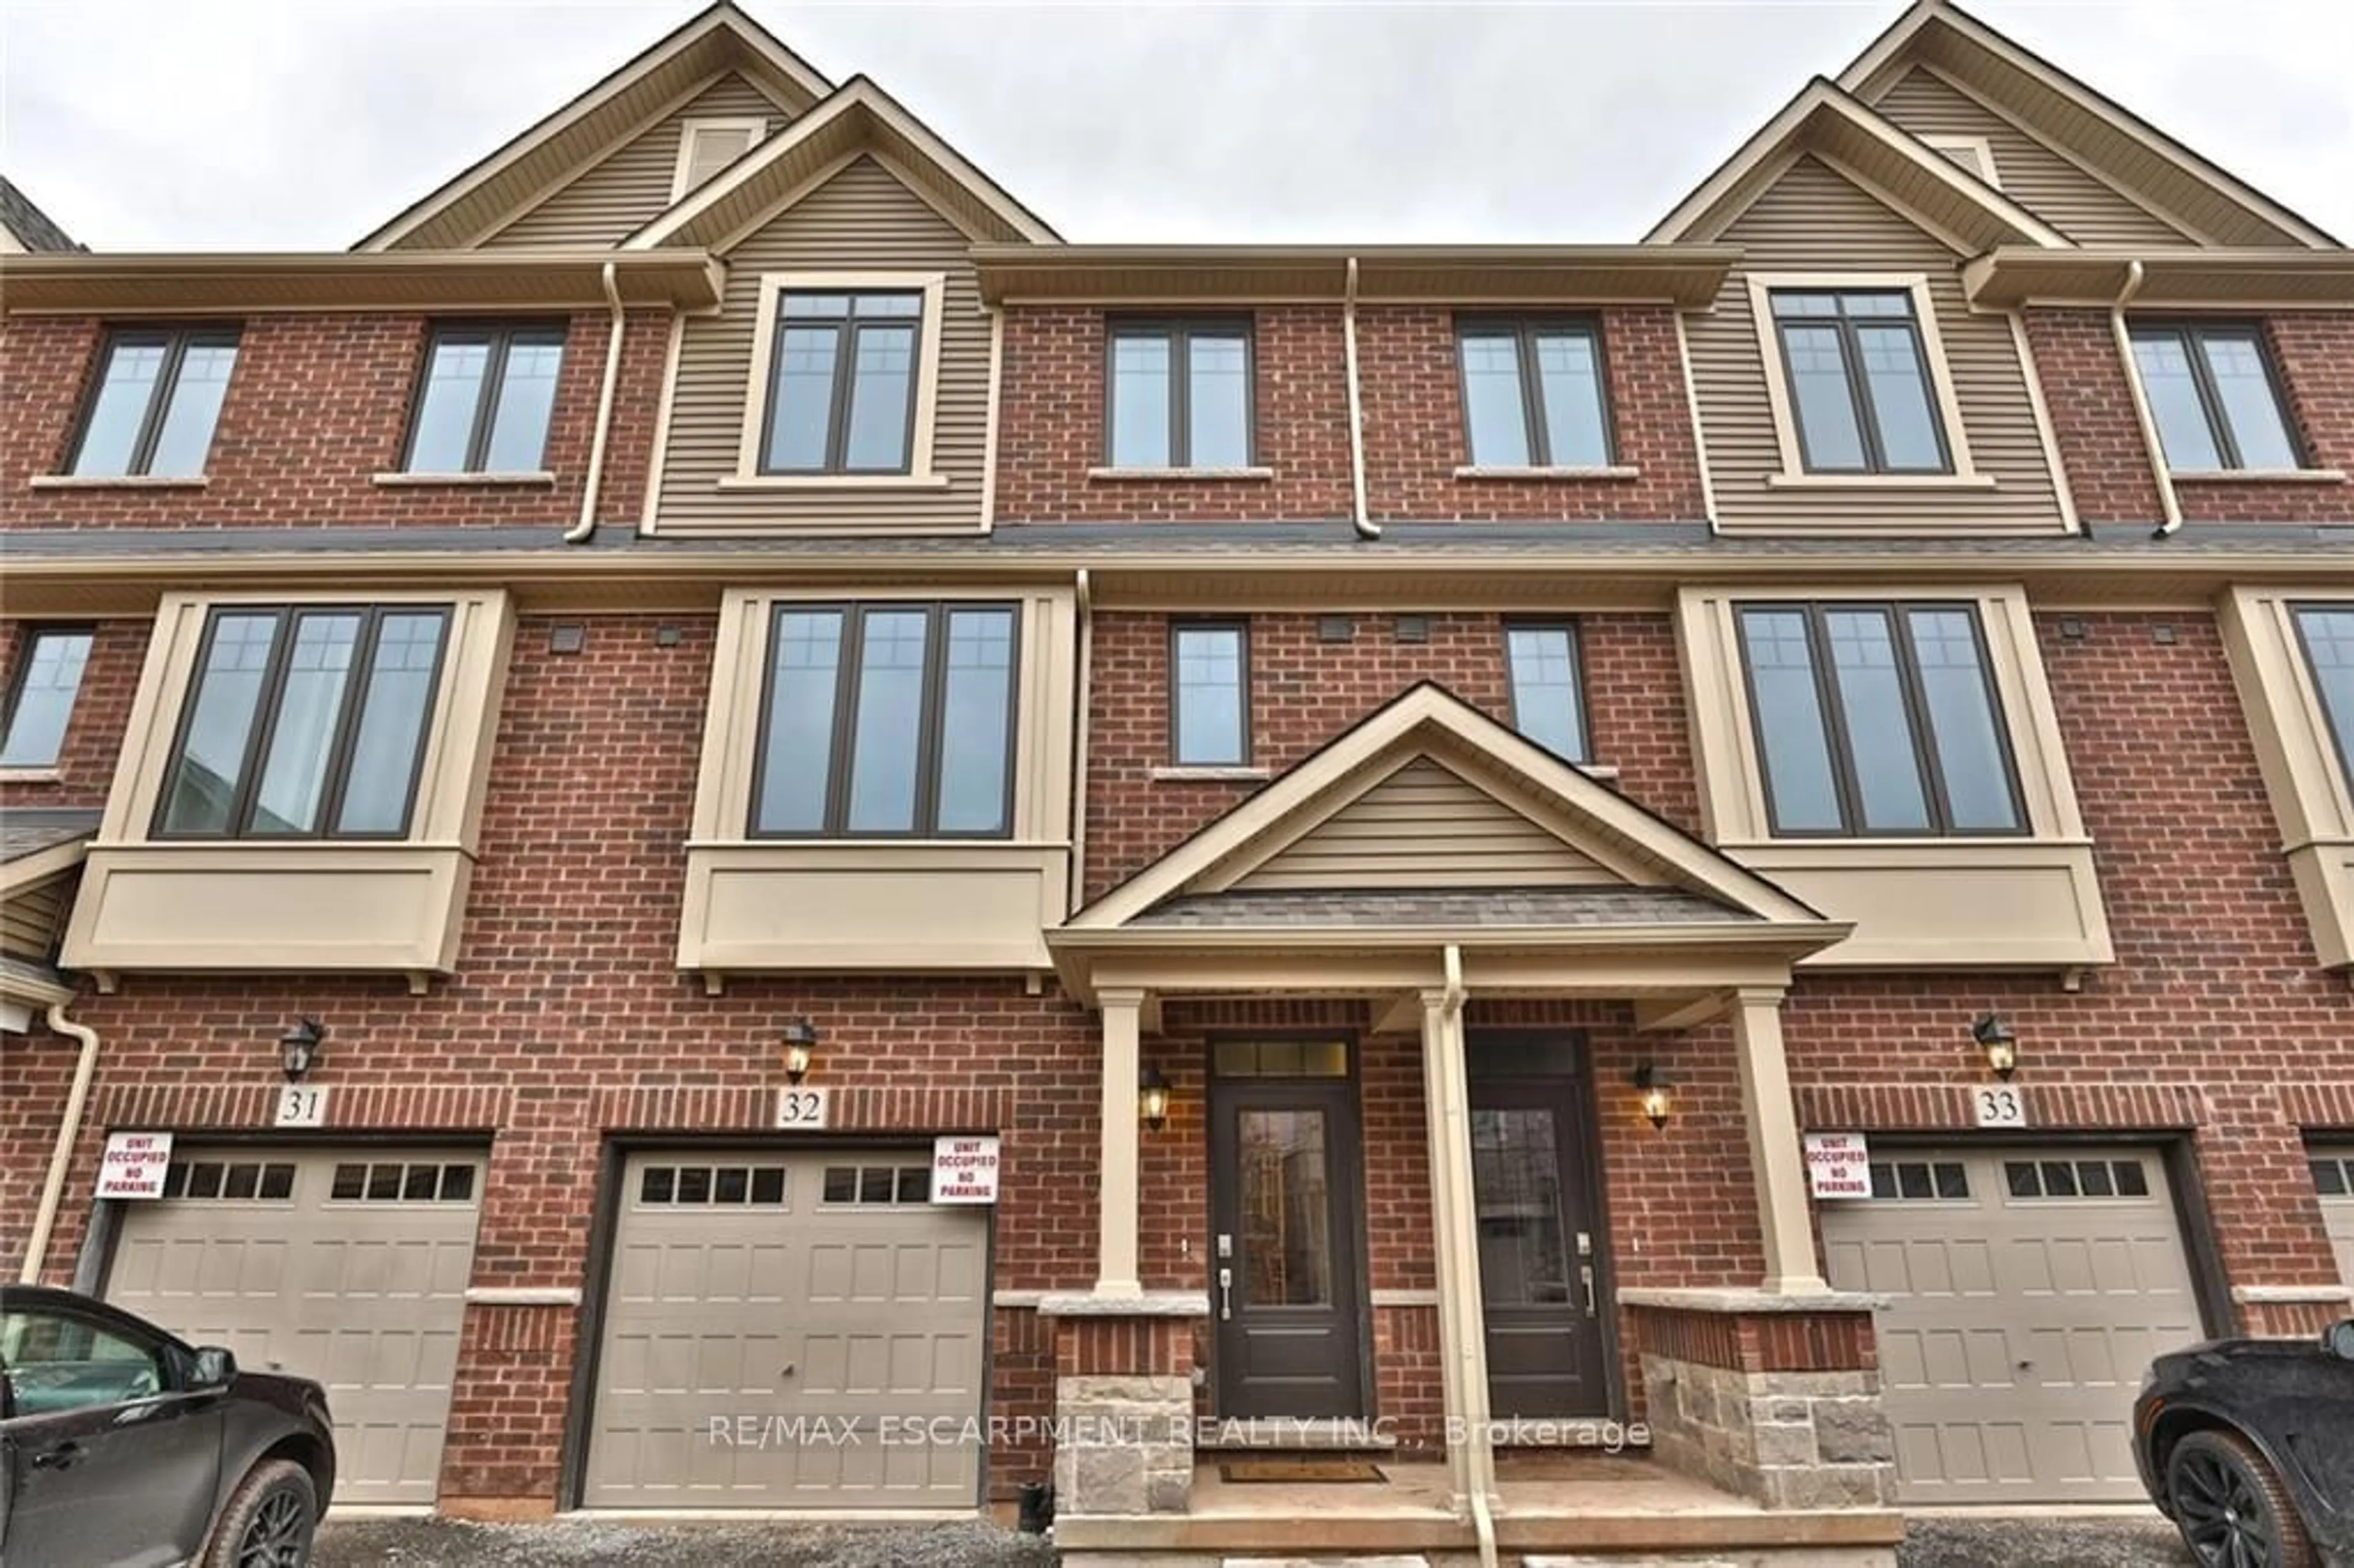 Home with brick exterior material for 288 Glover Rd #32, Hamilton Ontario L8E 5H6